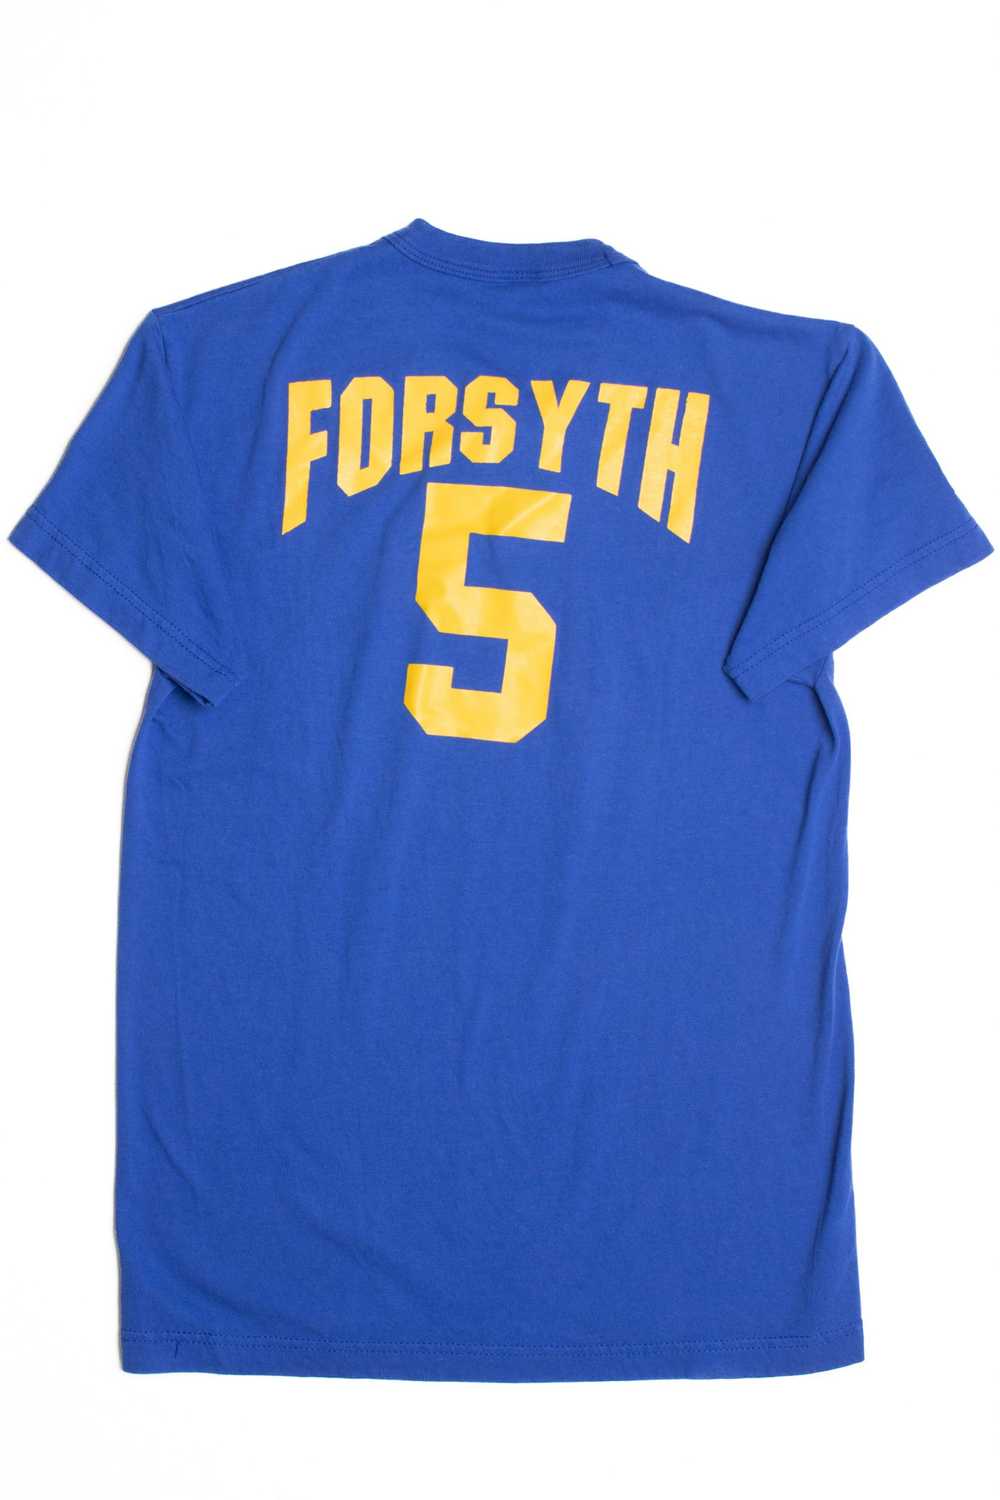 Forsyth #5 Mid-States T-Shirt - image 2